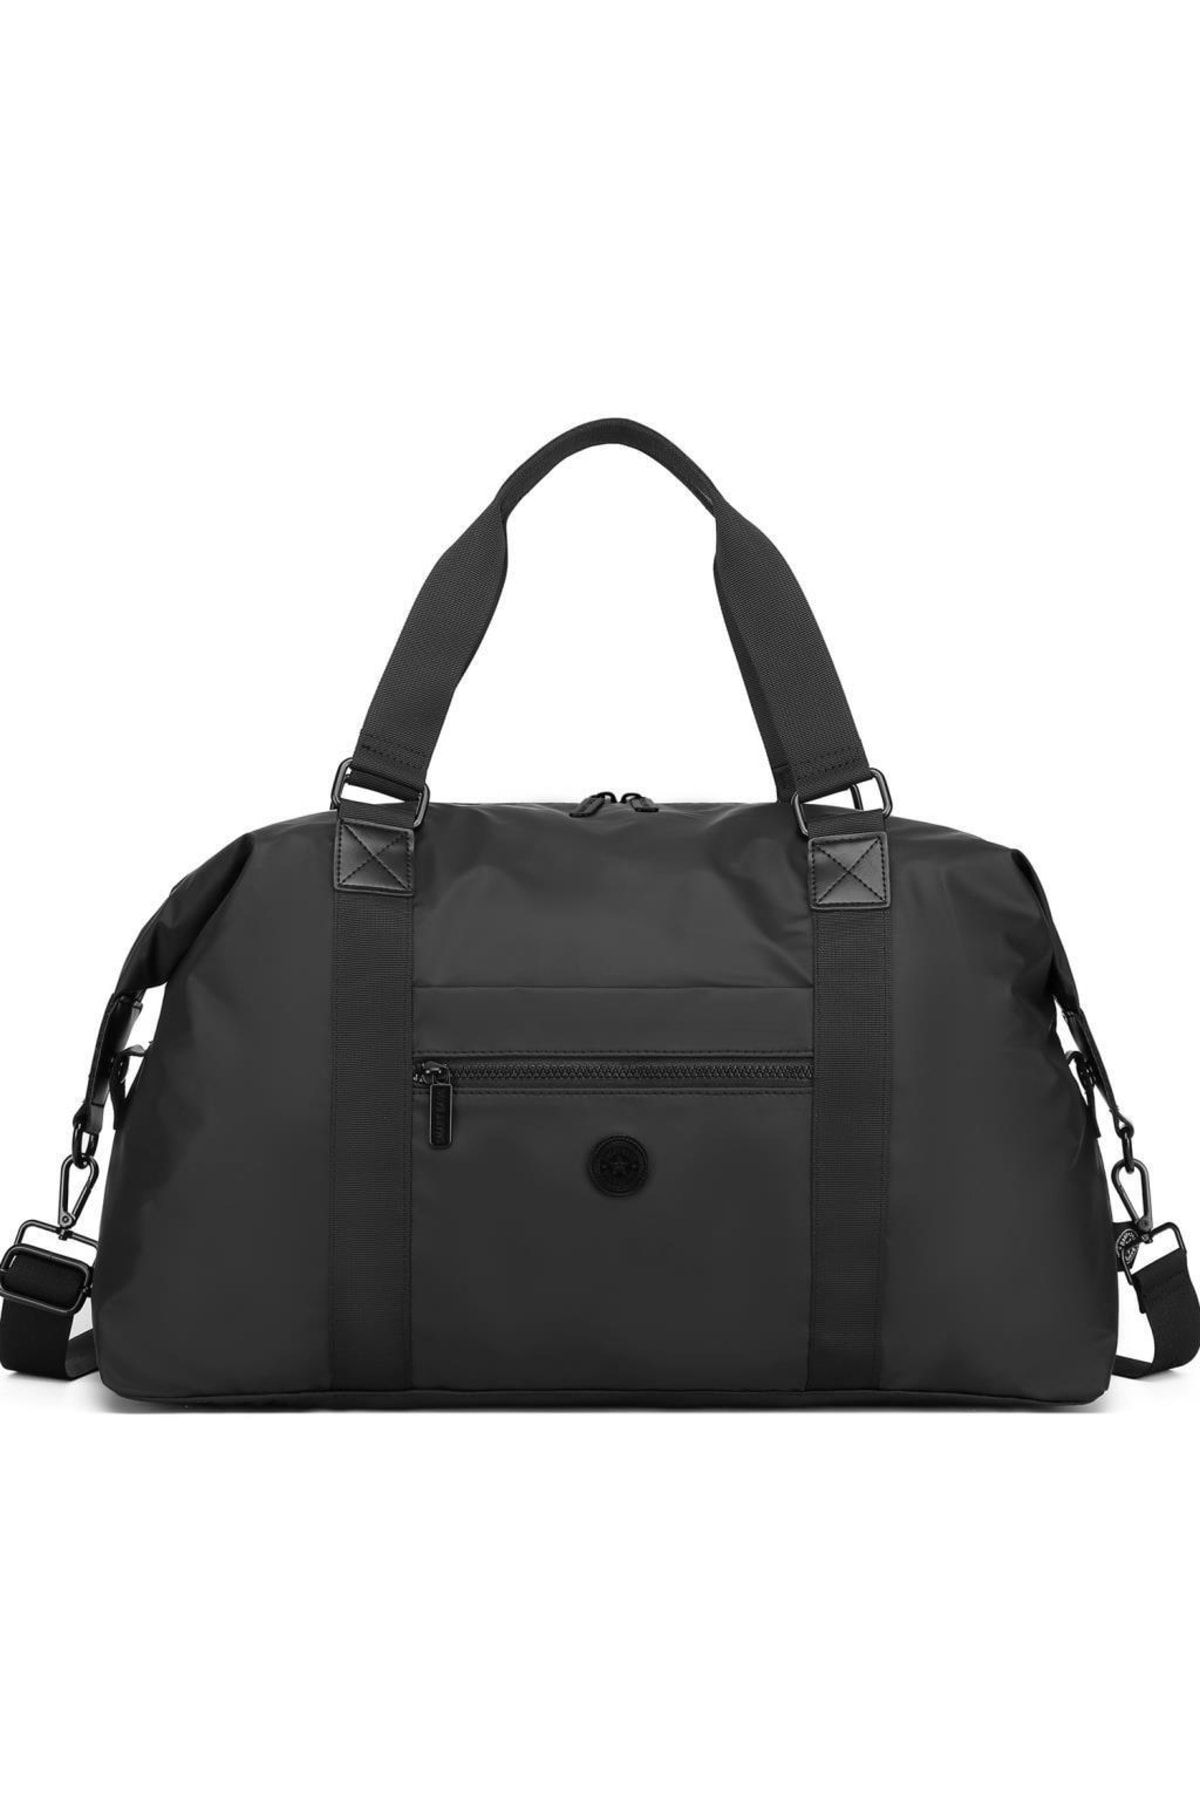 Smart Bags Algstore Smart Bags Gumi Siyah Unisex Spor Çantası Smb8659